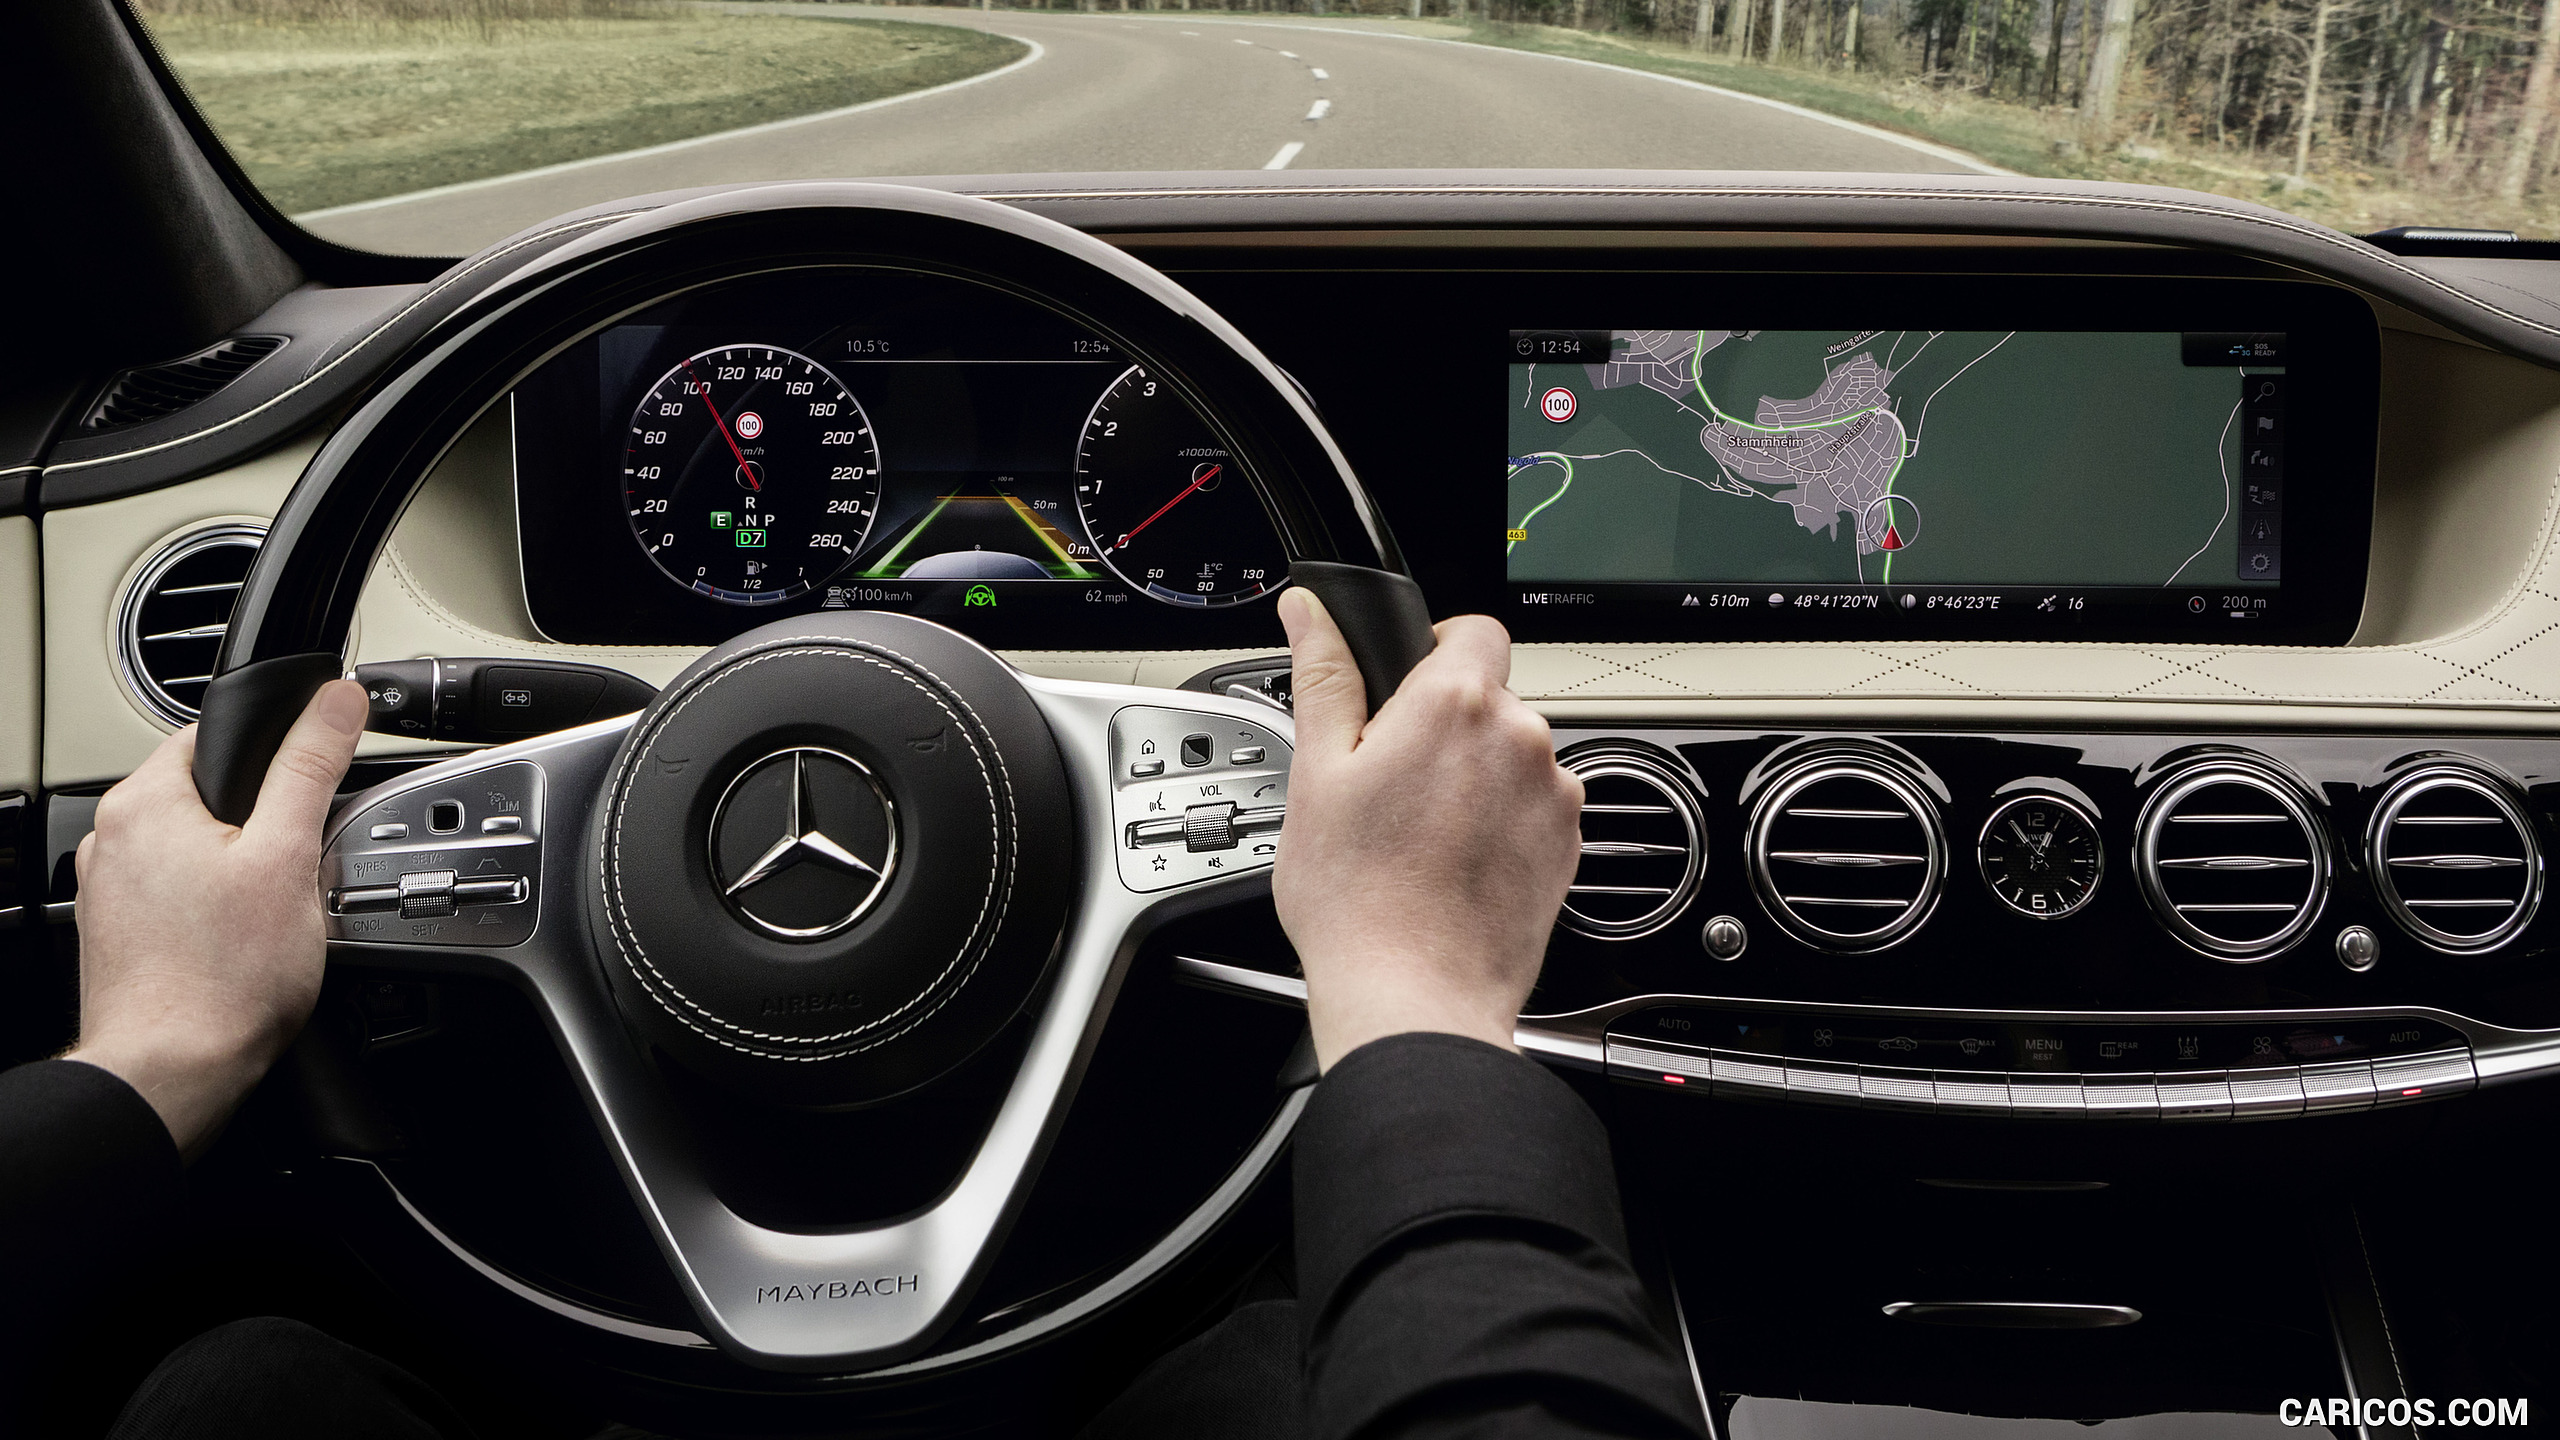 2018 Mercedes-Benz S-Class - Intelligent Drive | Caricos